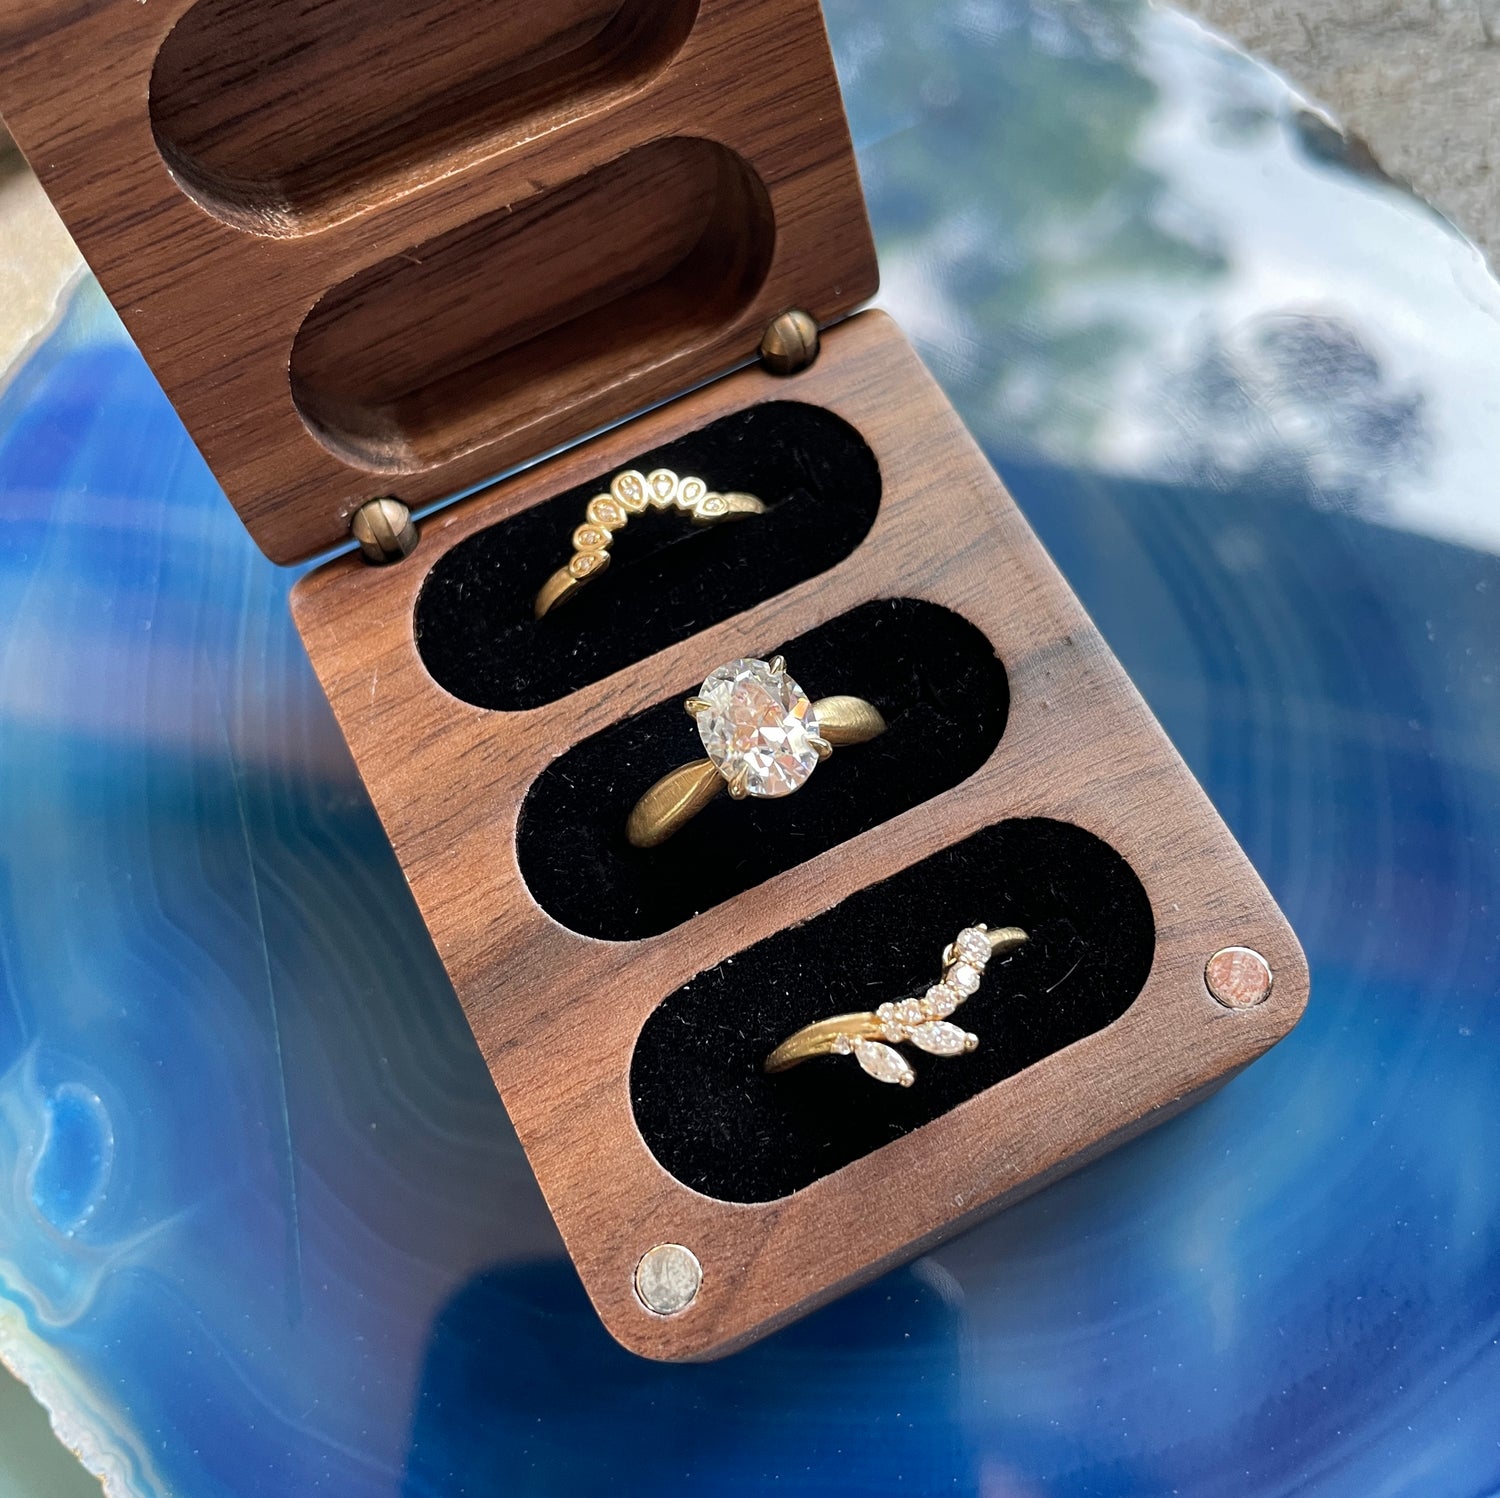 Three ring wedding set in wooden jewelry box